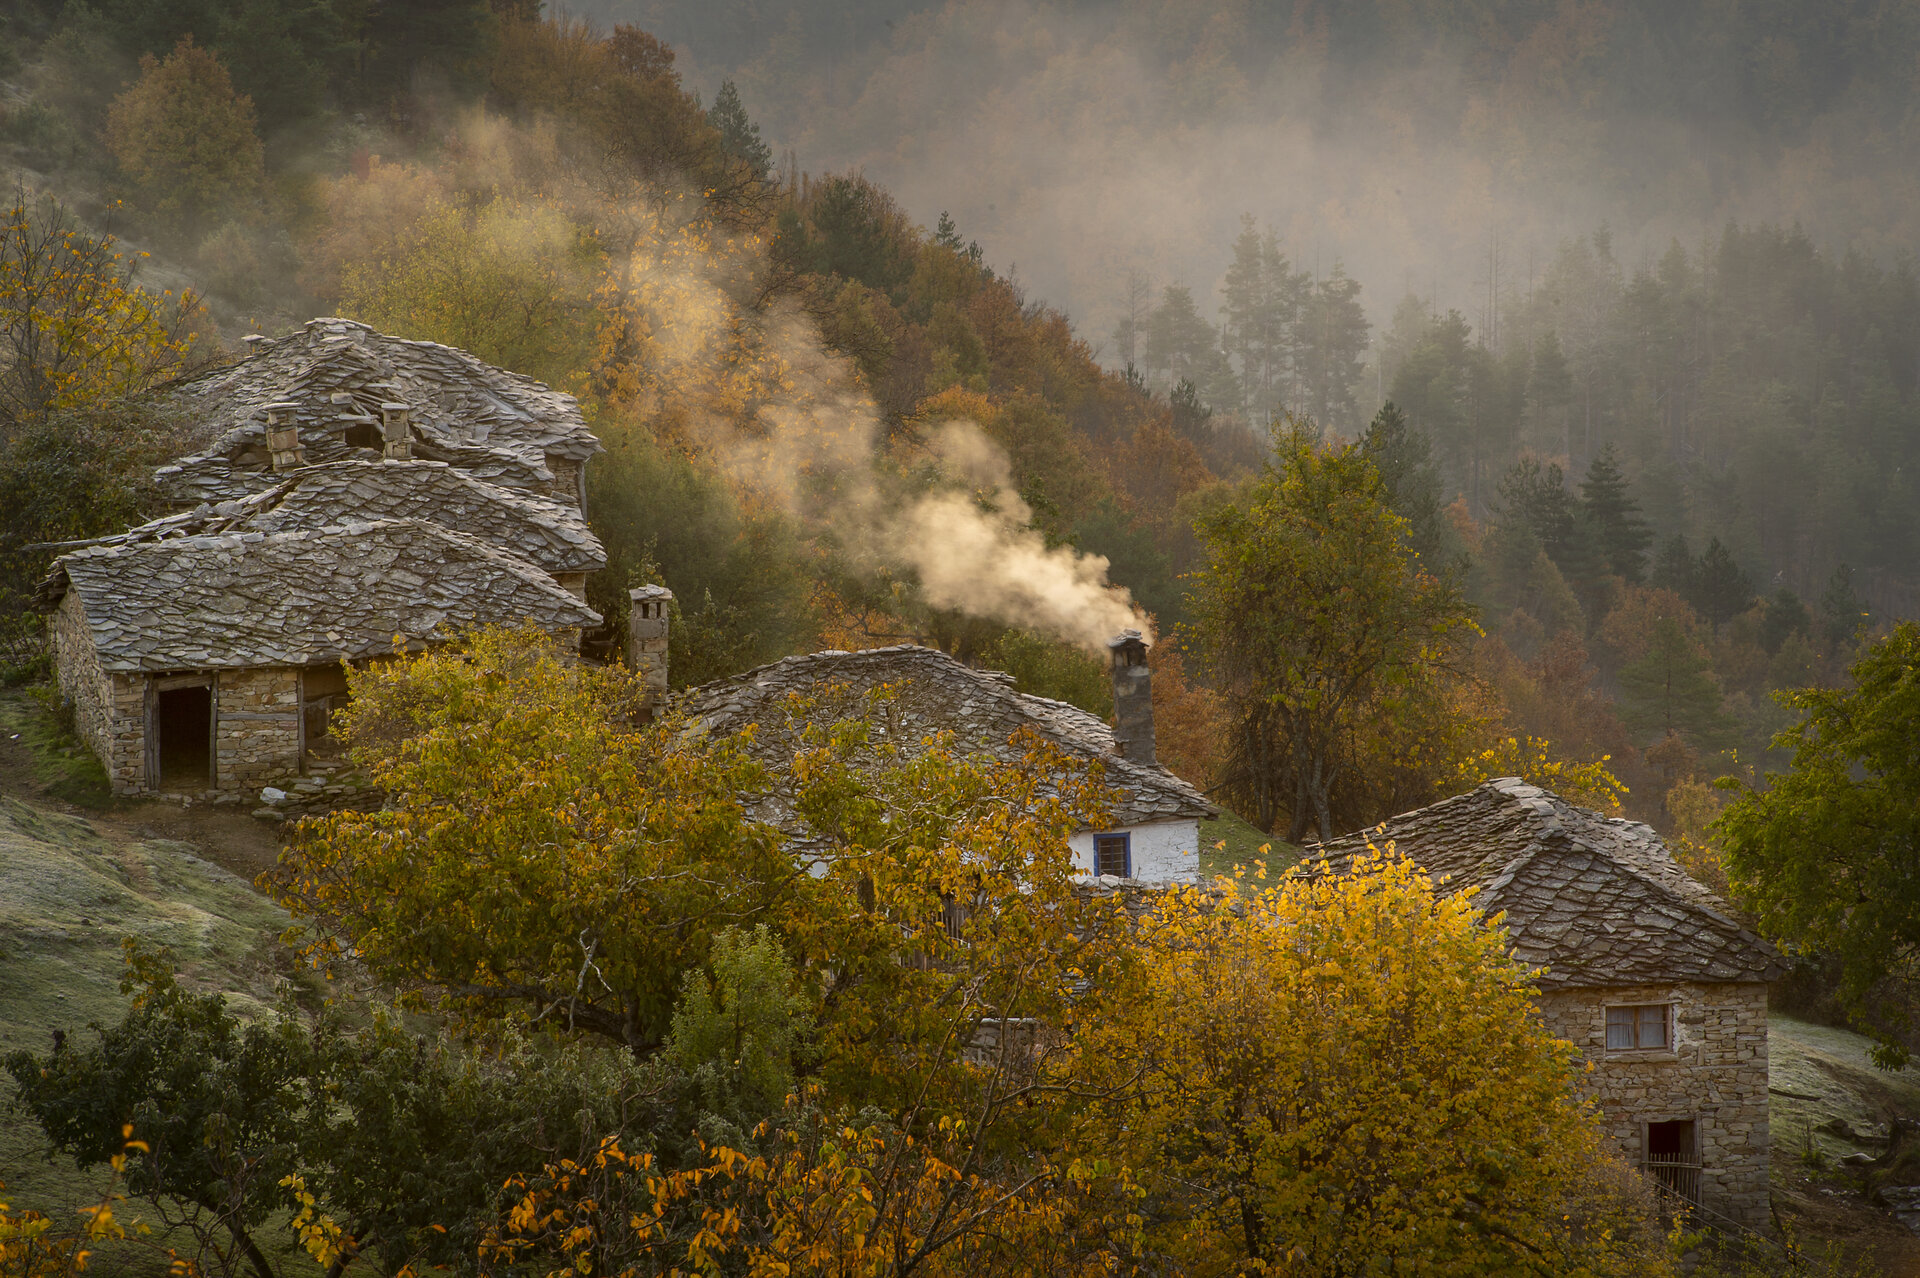 Photo in Landscape | Author Цончо Балканжиев - Цончо_Балканджиев | PHOTO FORUM